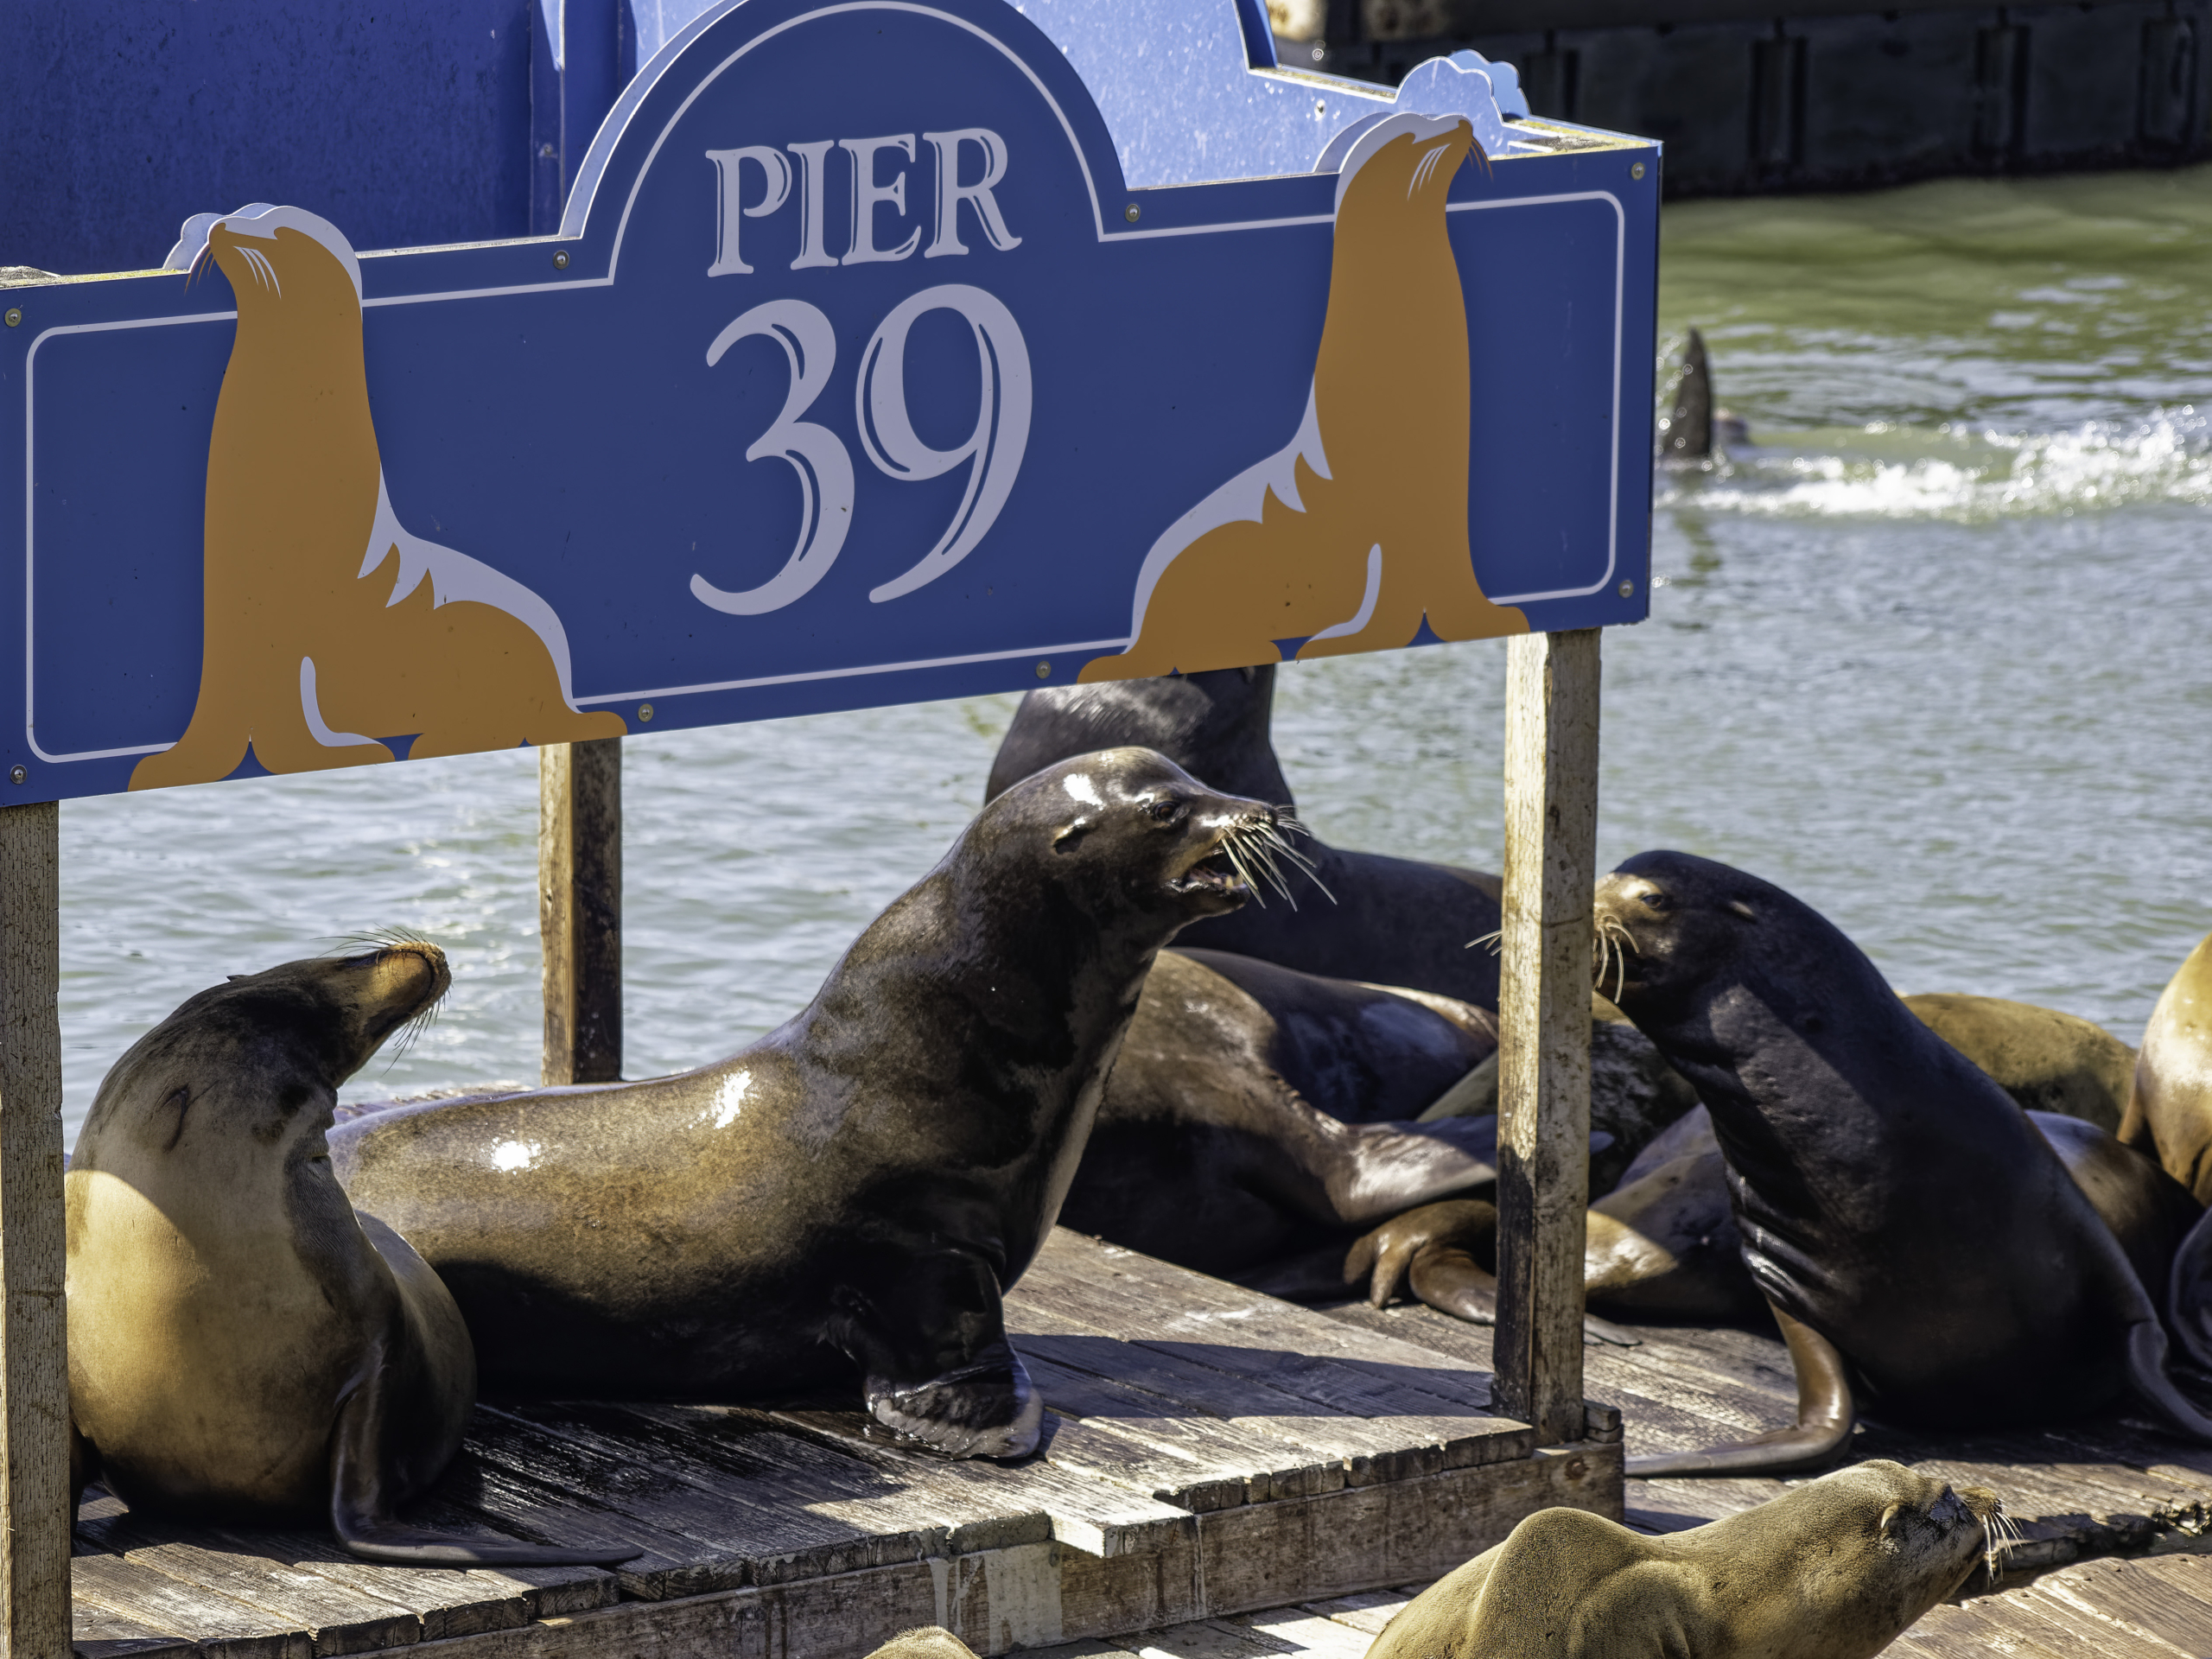 marine mammal center pier 39 sea lion spot